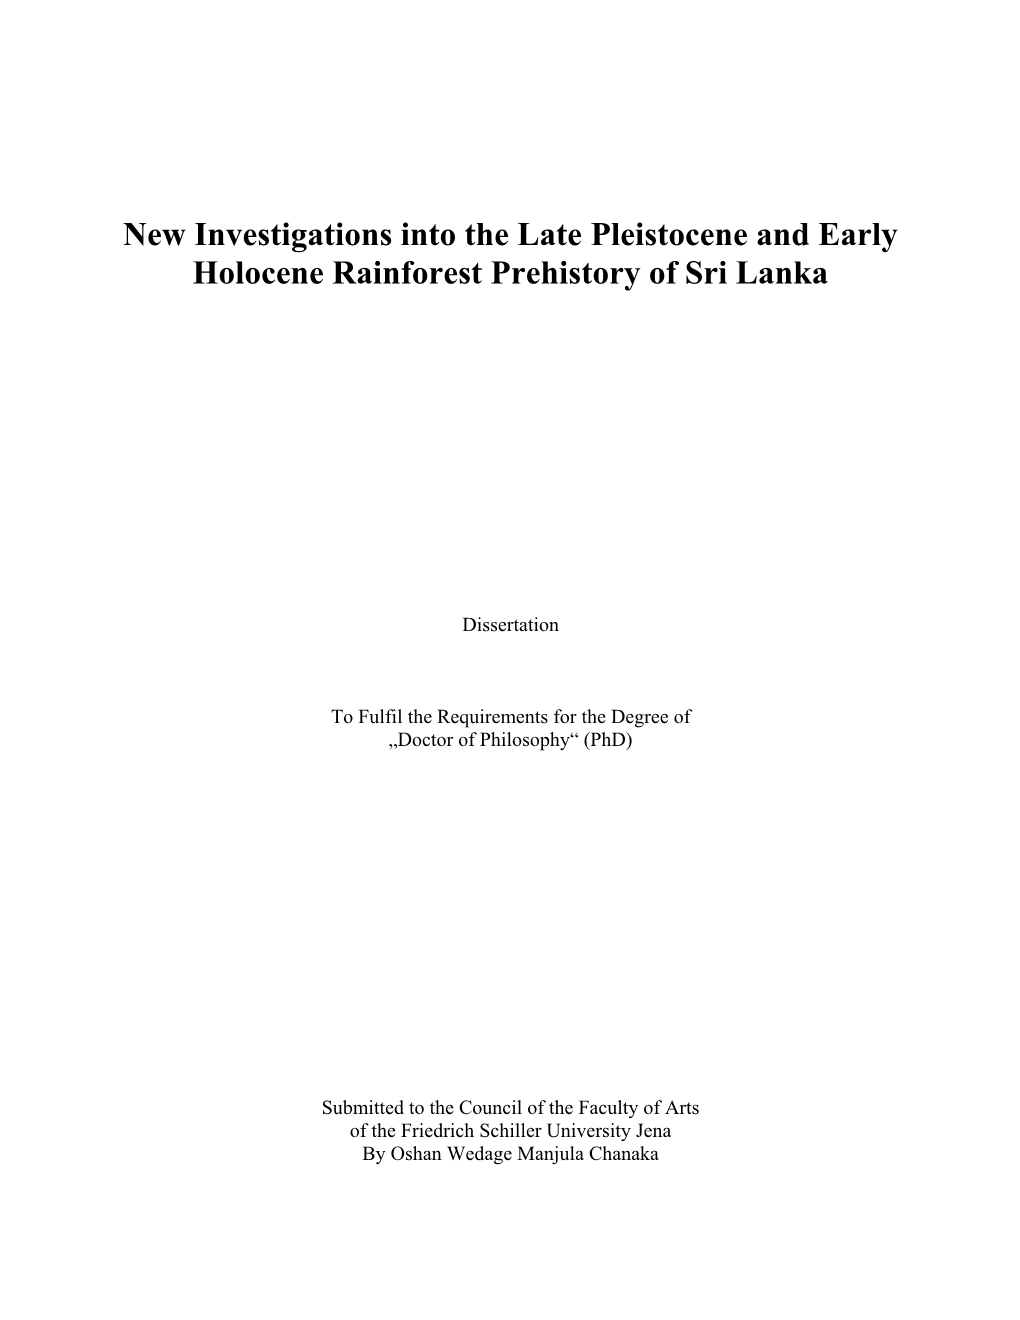 New Investigations Into the Late Pleistocene and Early Holocene Rainforest Prehistory of Sri Lanka